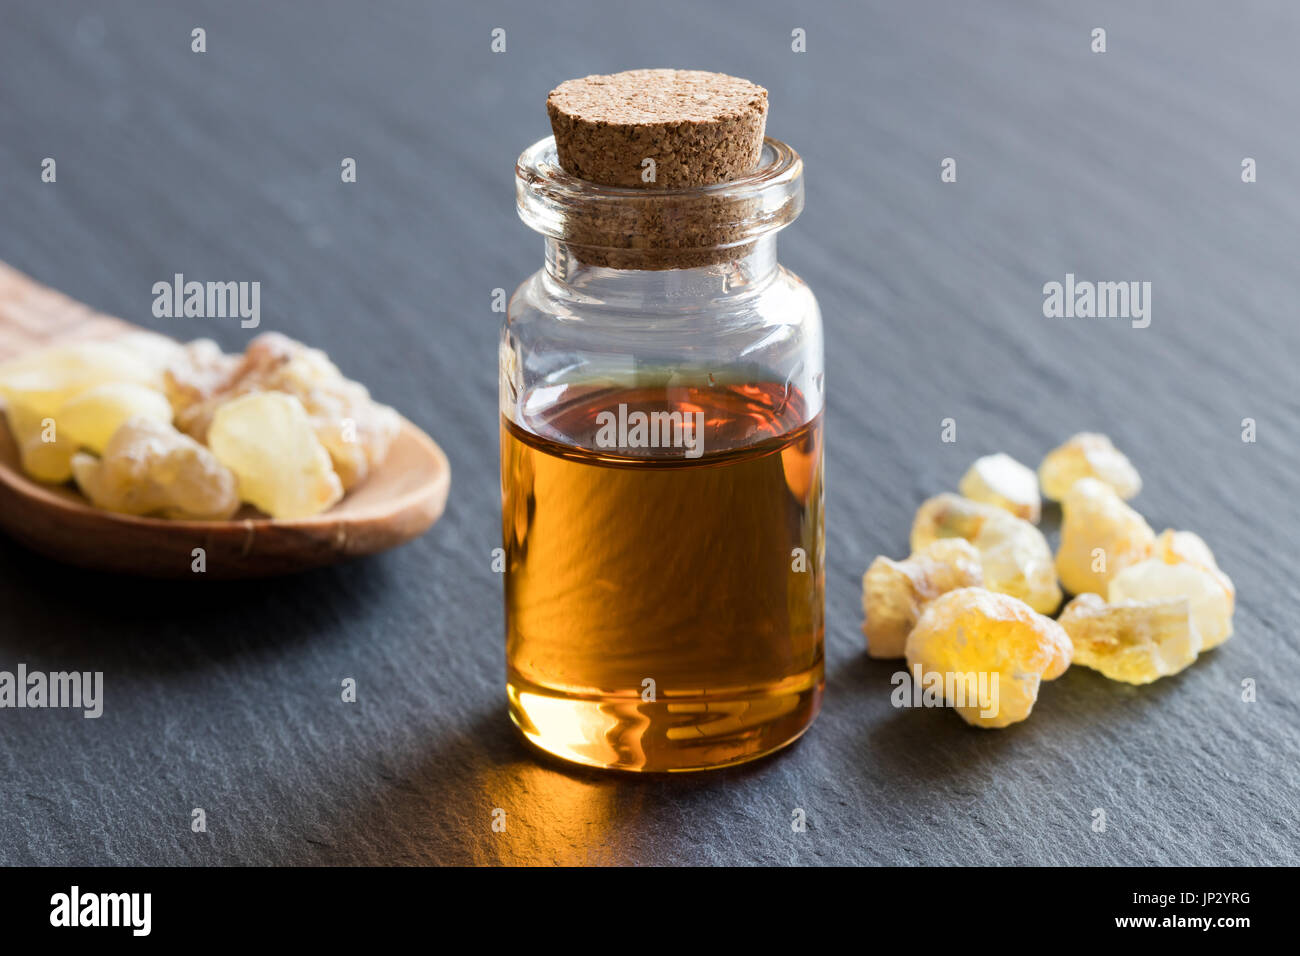 Bible Tree Resin Medicine Oil 15ml Rich Blend of Omani